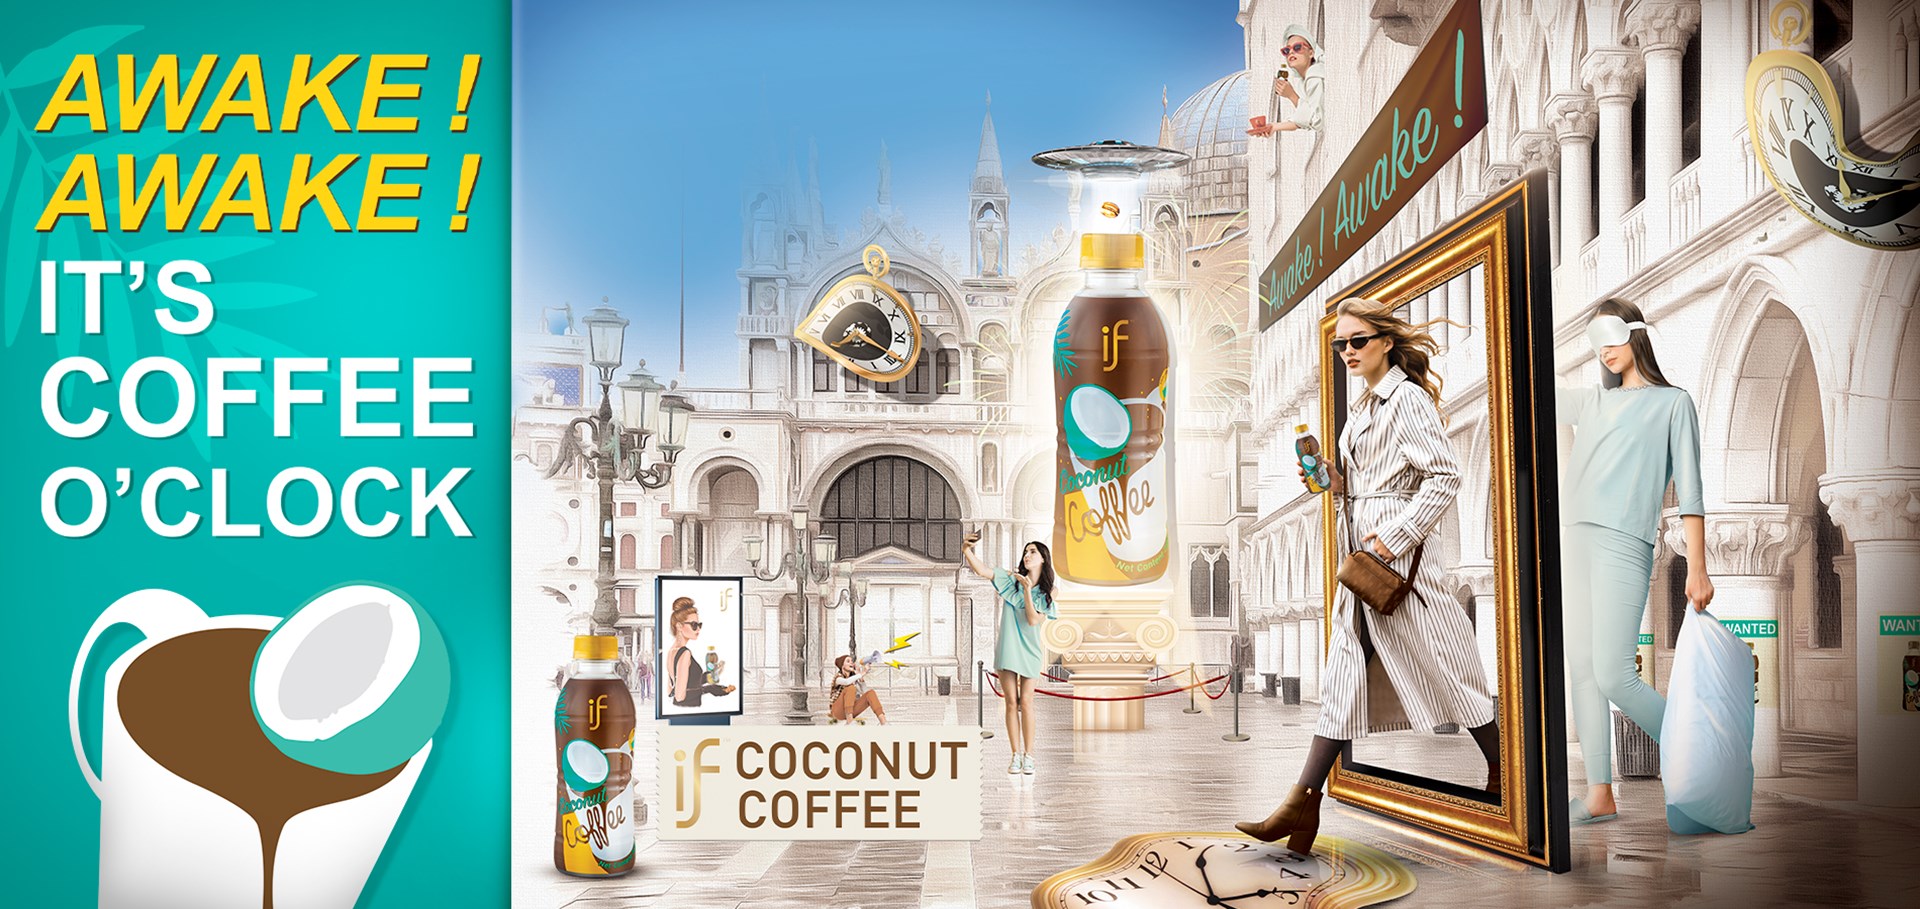 IF Coconut Coffee